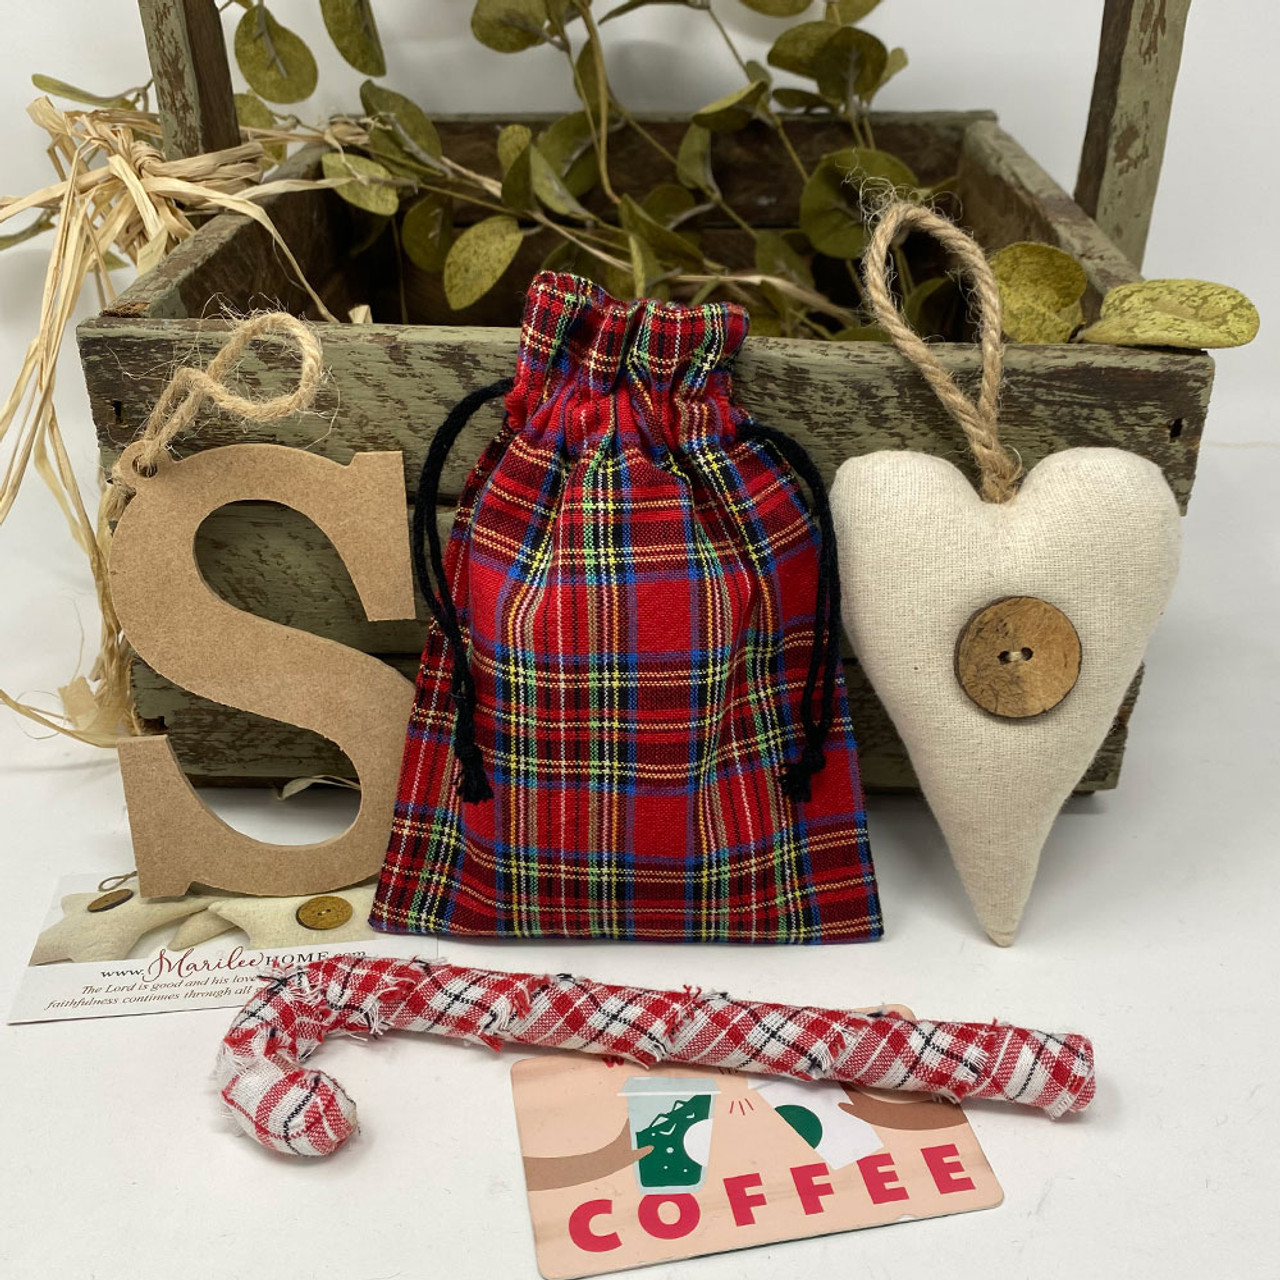 Scotty Red Tartan Plaid Small Gift Bag: 6" x 4.5" - Set of 6